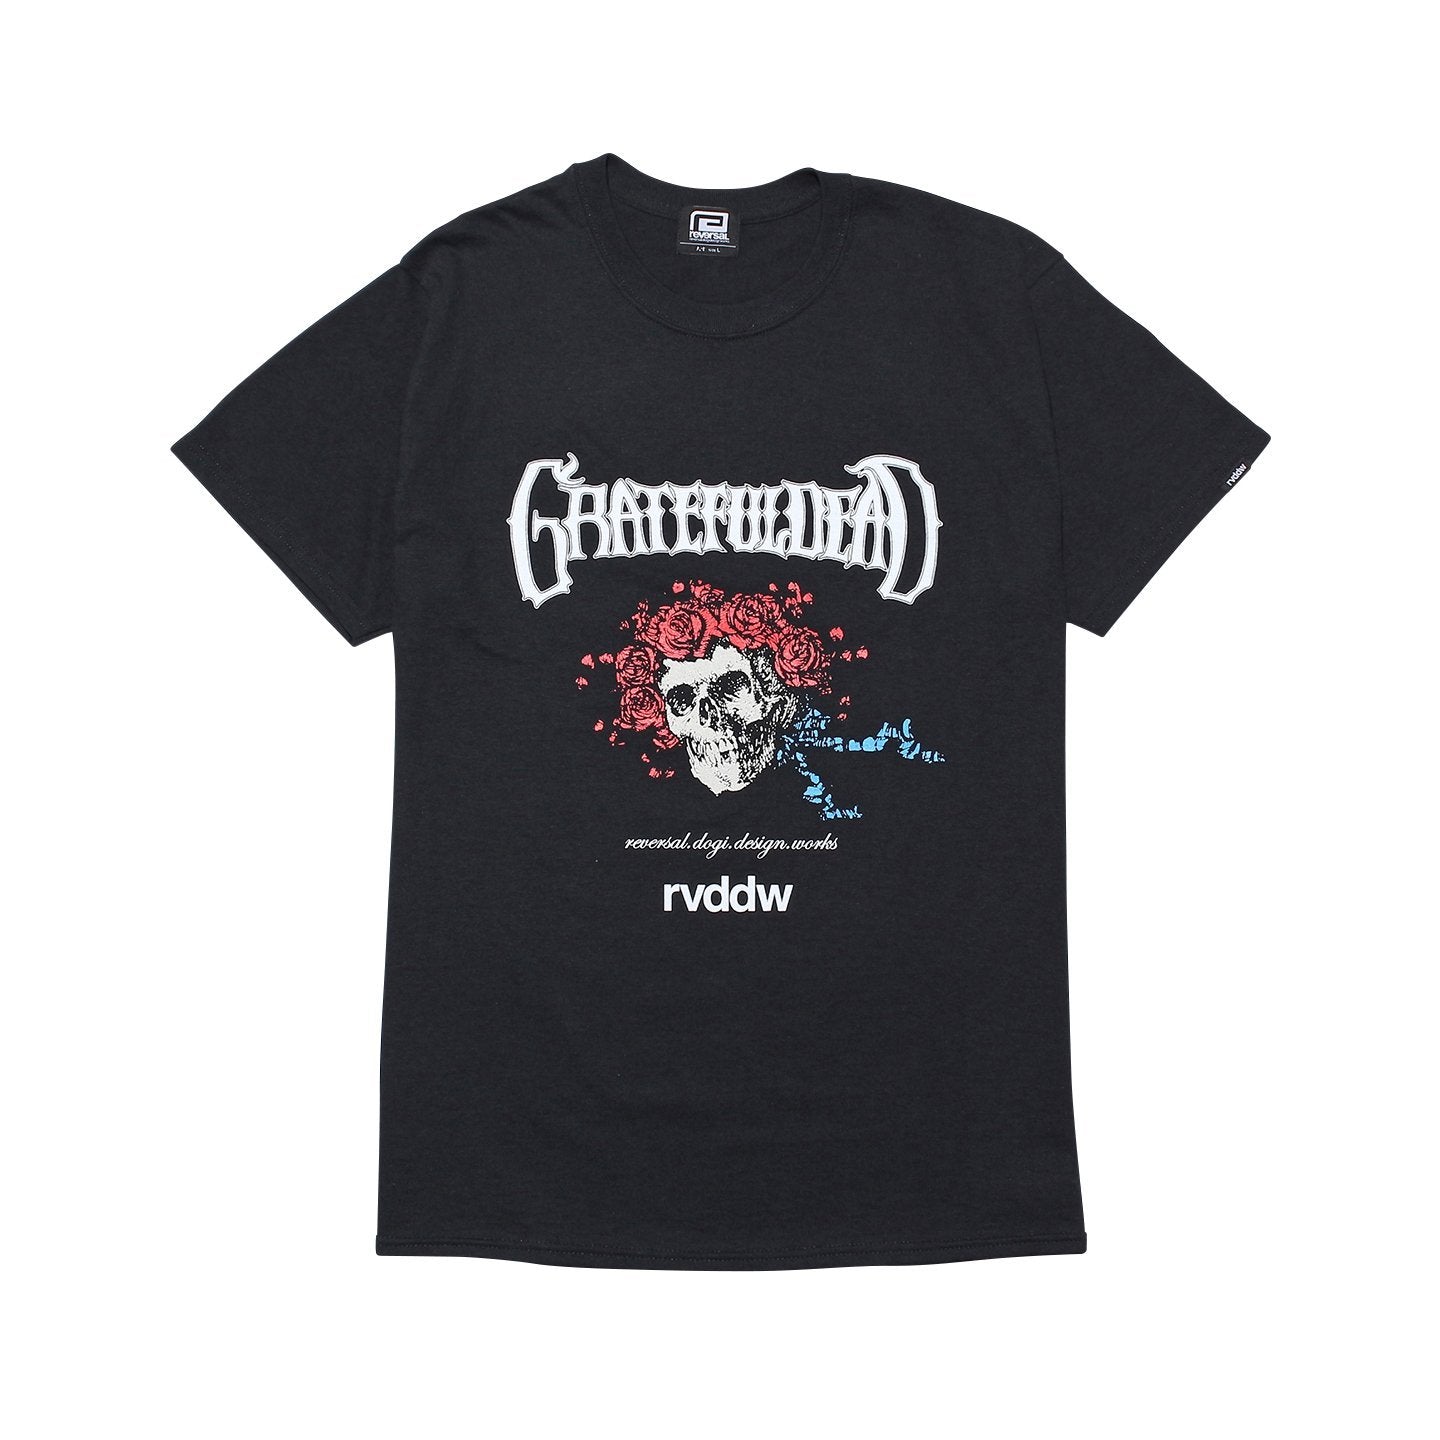 Skull and Roses T-Shirt-Reversal RVDDW-ChokeSports